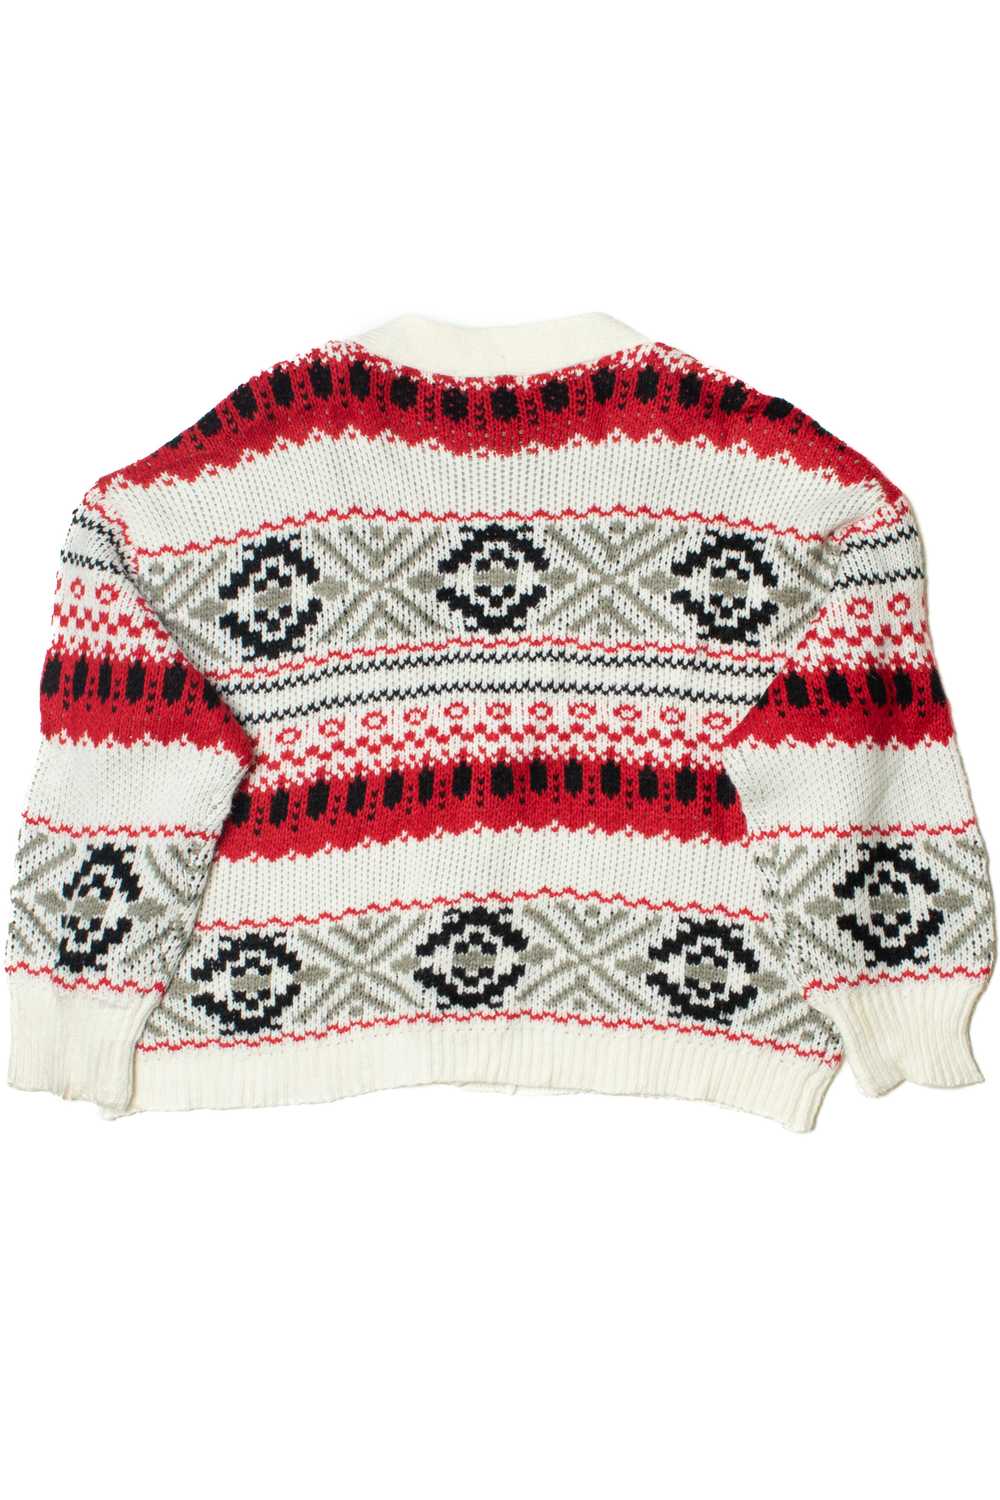 BB Dakota Geometric Pattern Cardigan Sweater - image 2